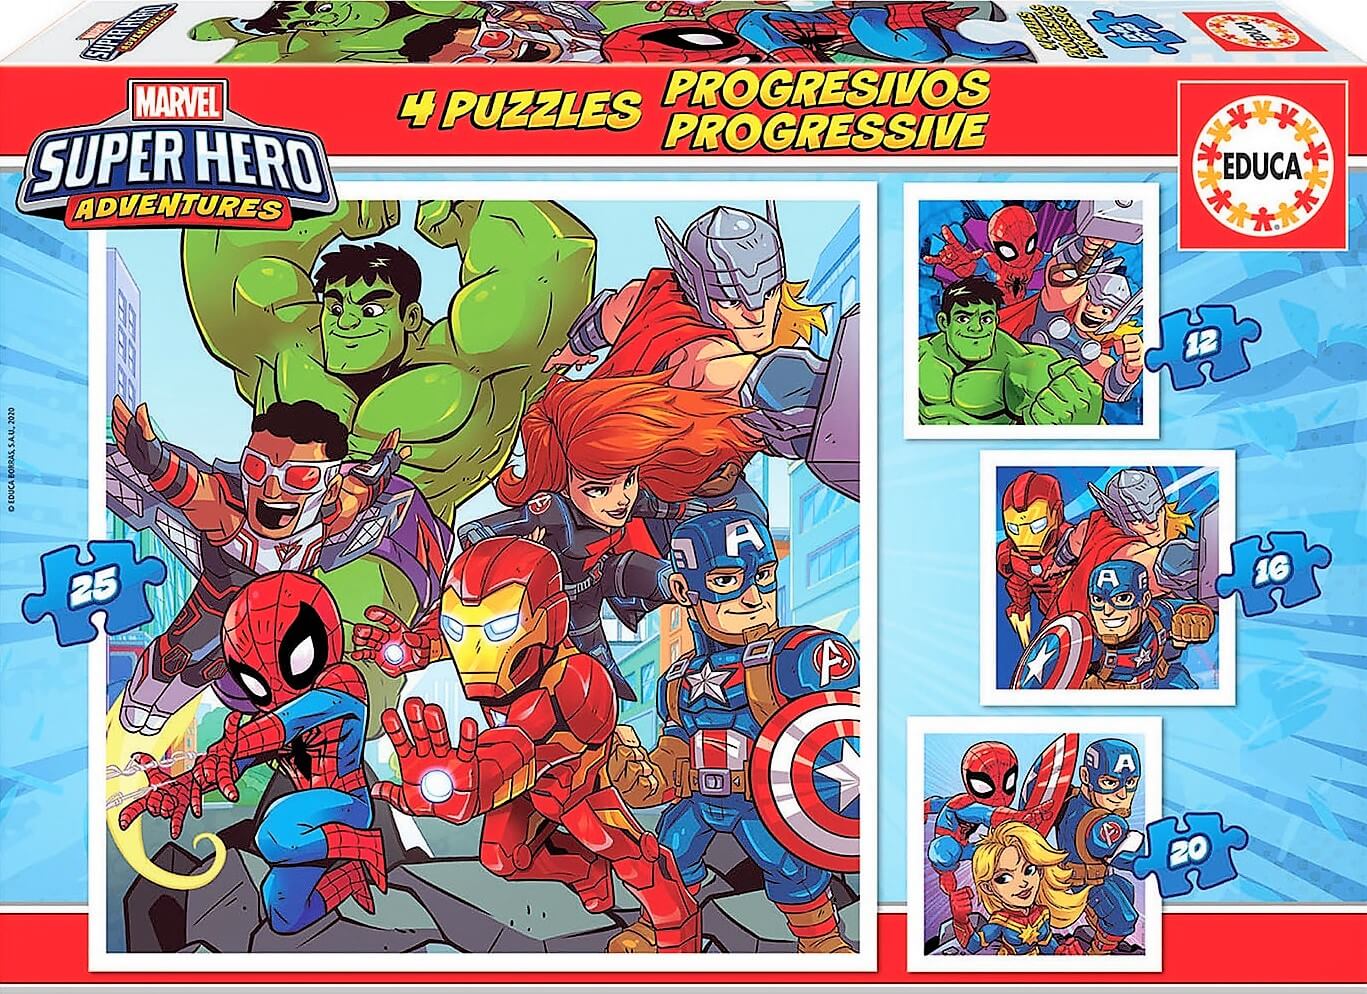 12-16-20-25 Marvel Super Heroes Adventures